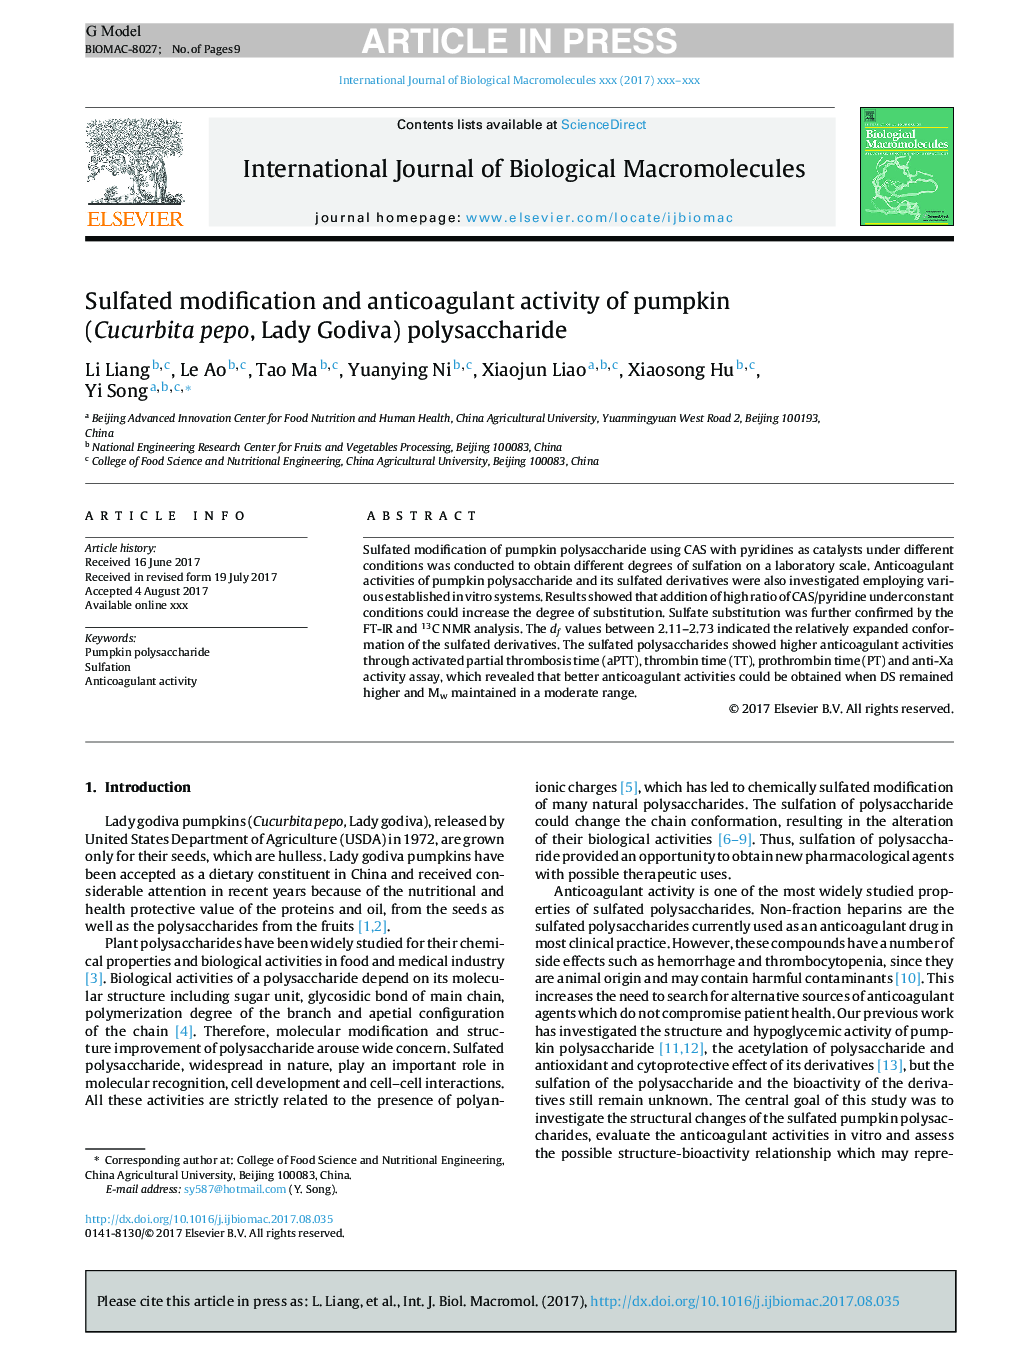 Sulfated modification and anticoagulant activity of pumpkin (Cucurbita pepo, Lady Godiva) polysaccharide